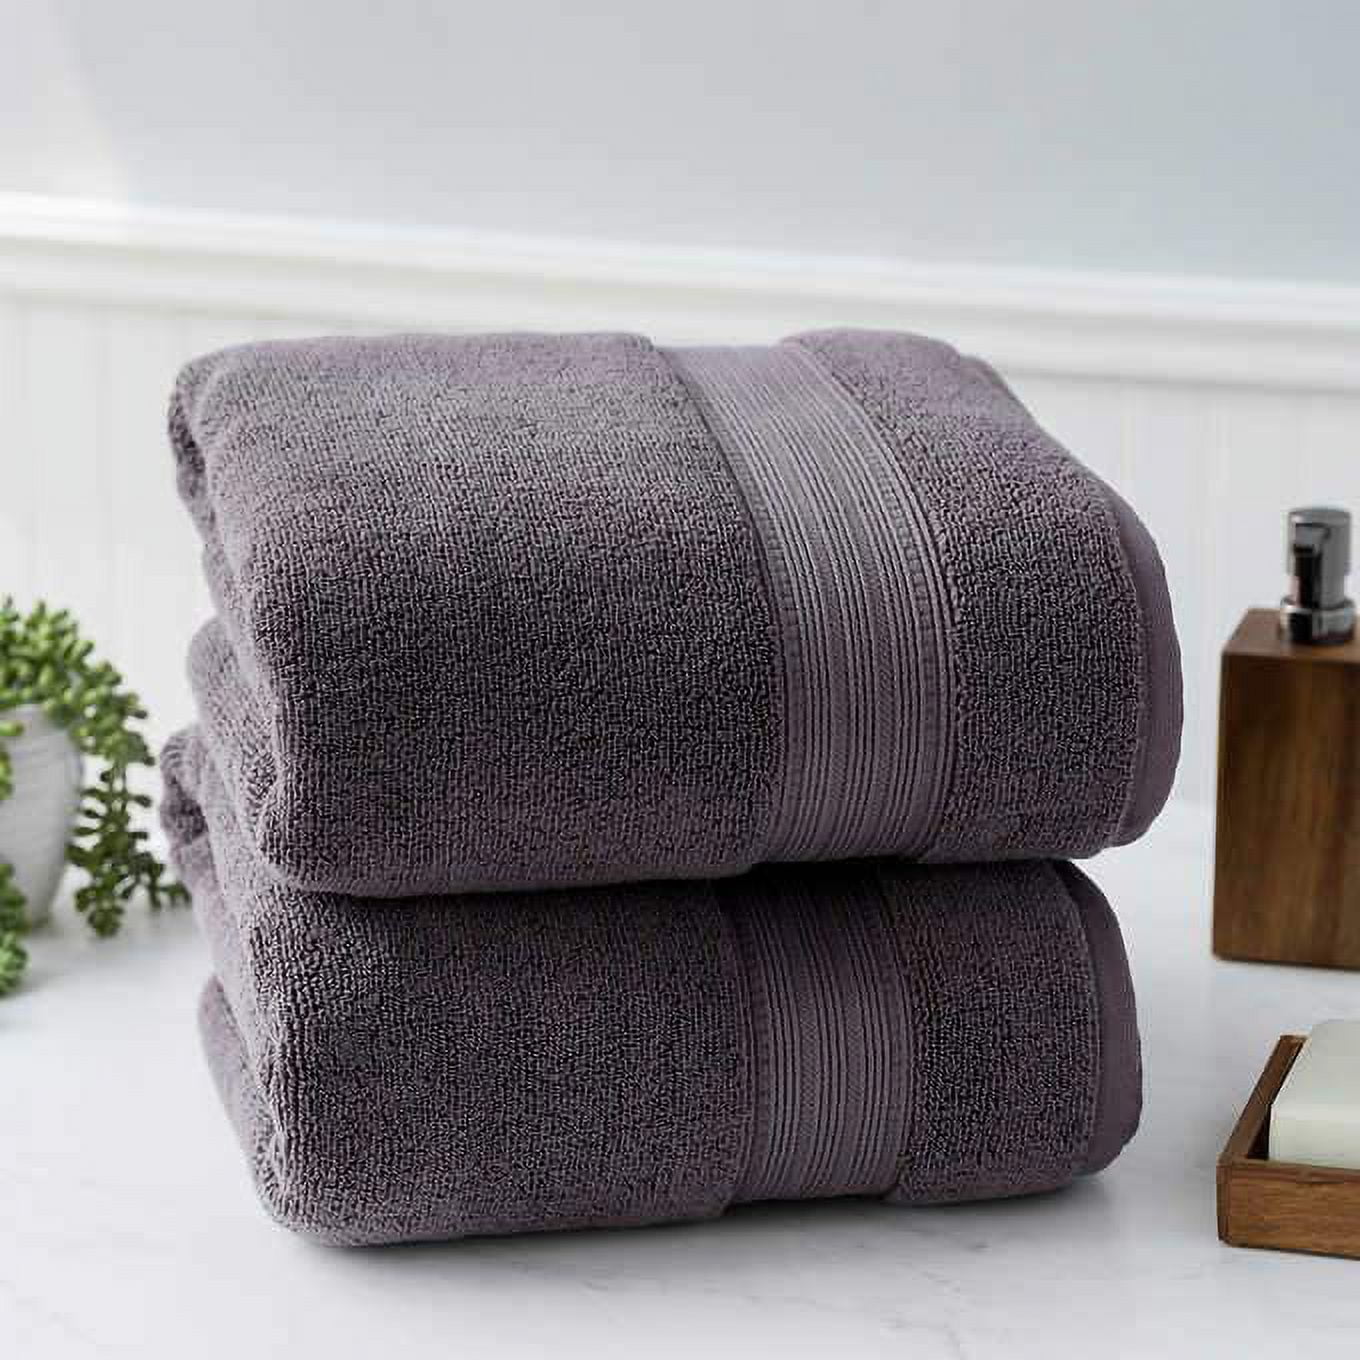 Charisma Hygro Cotton Luxury Bath Towel - Lotus Gallery